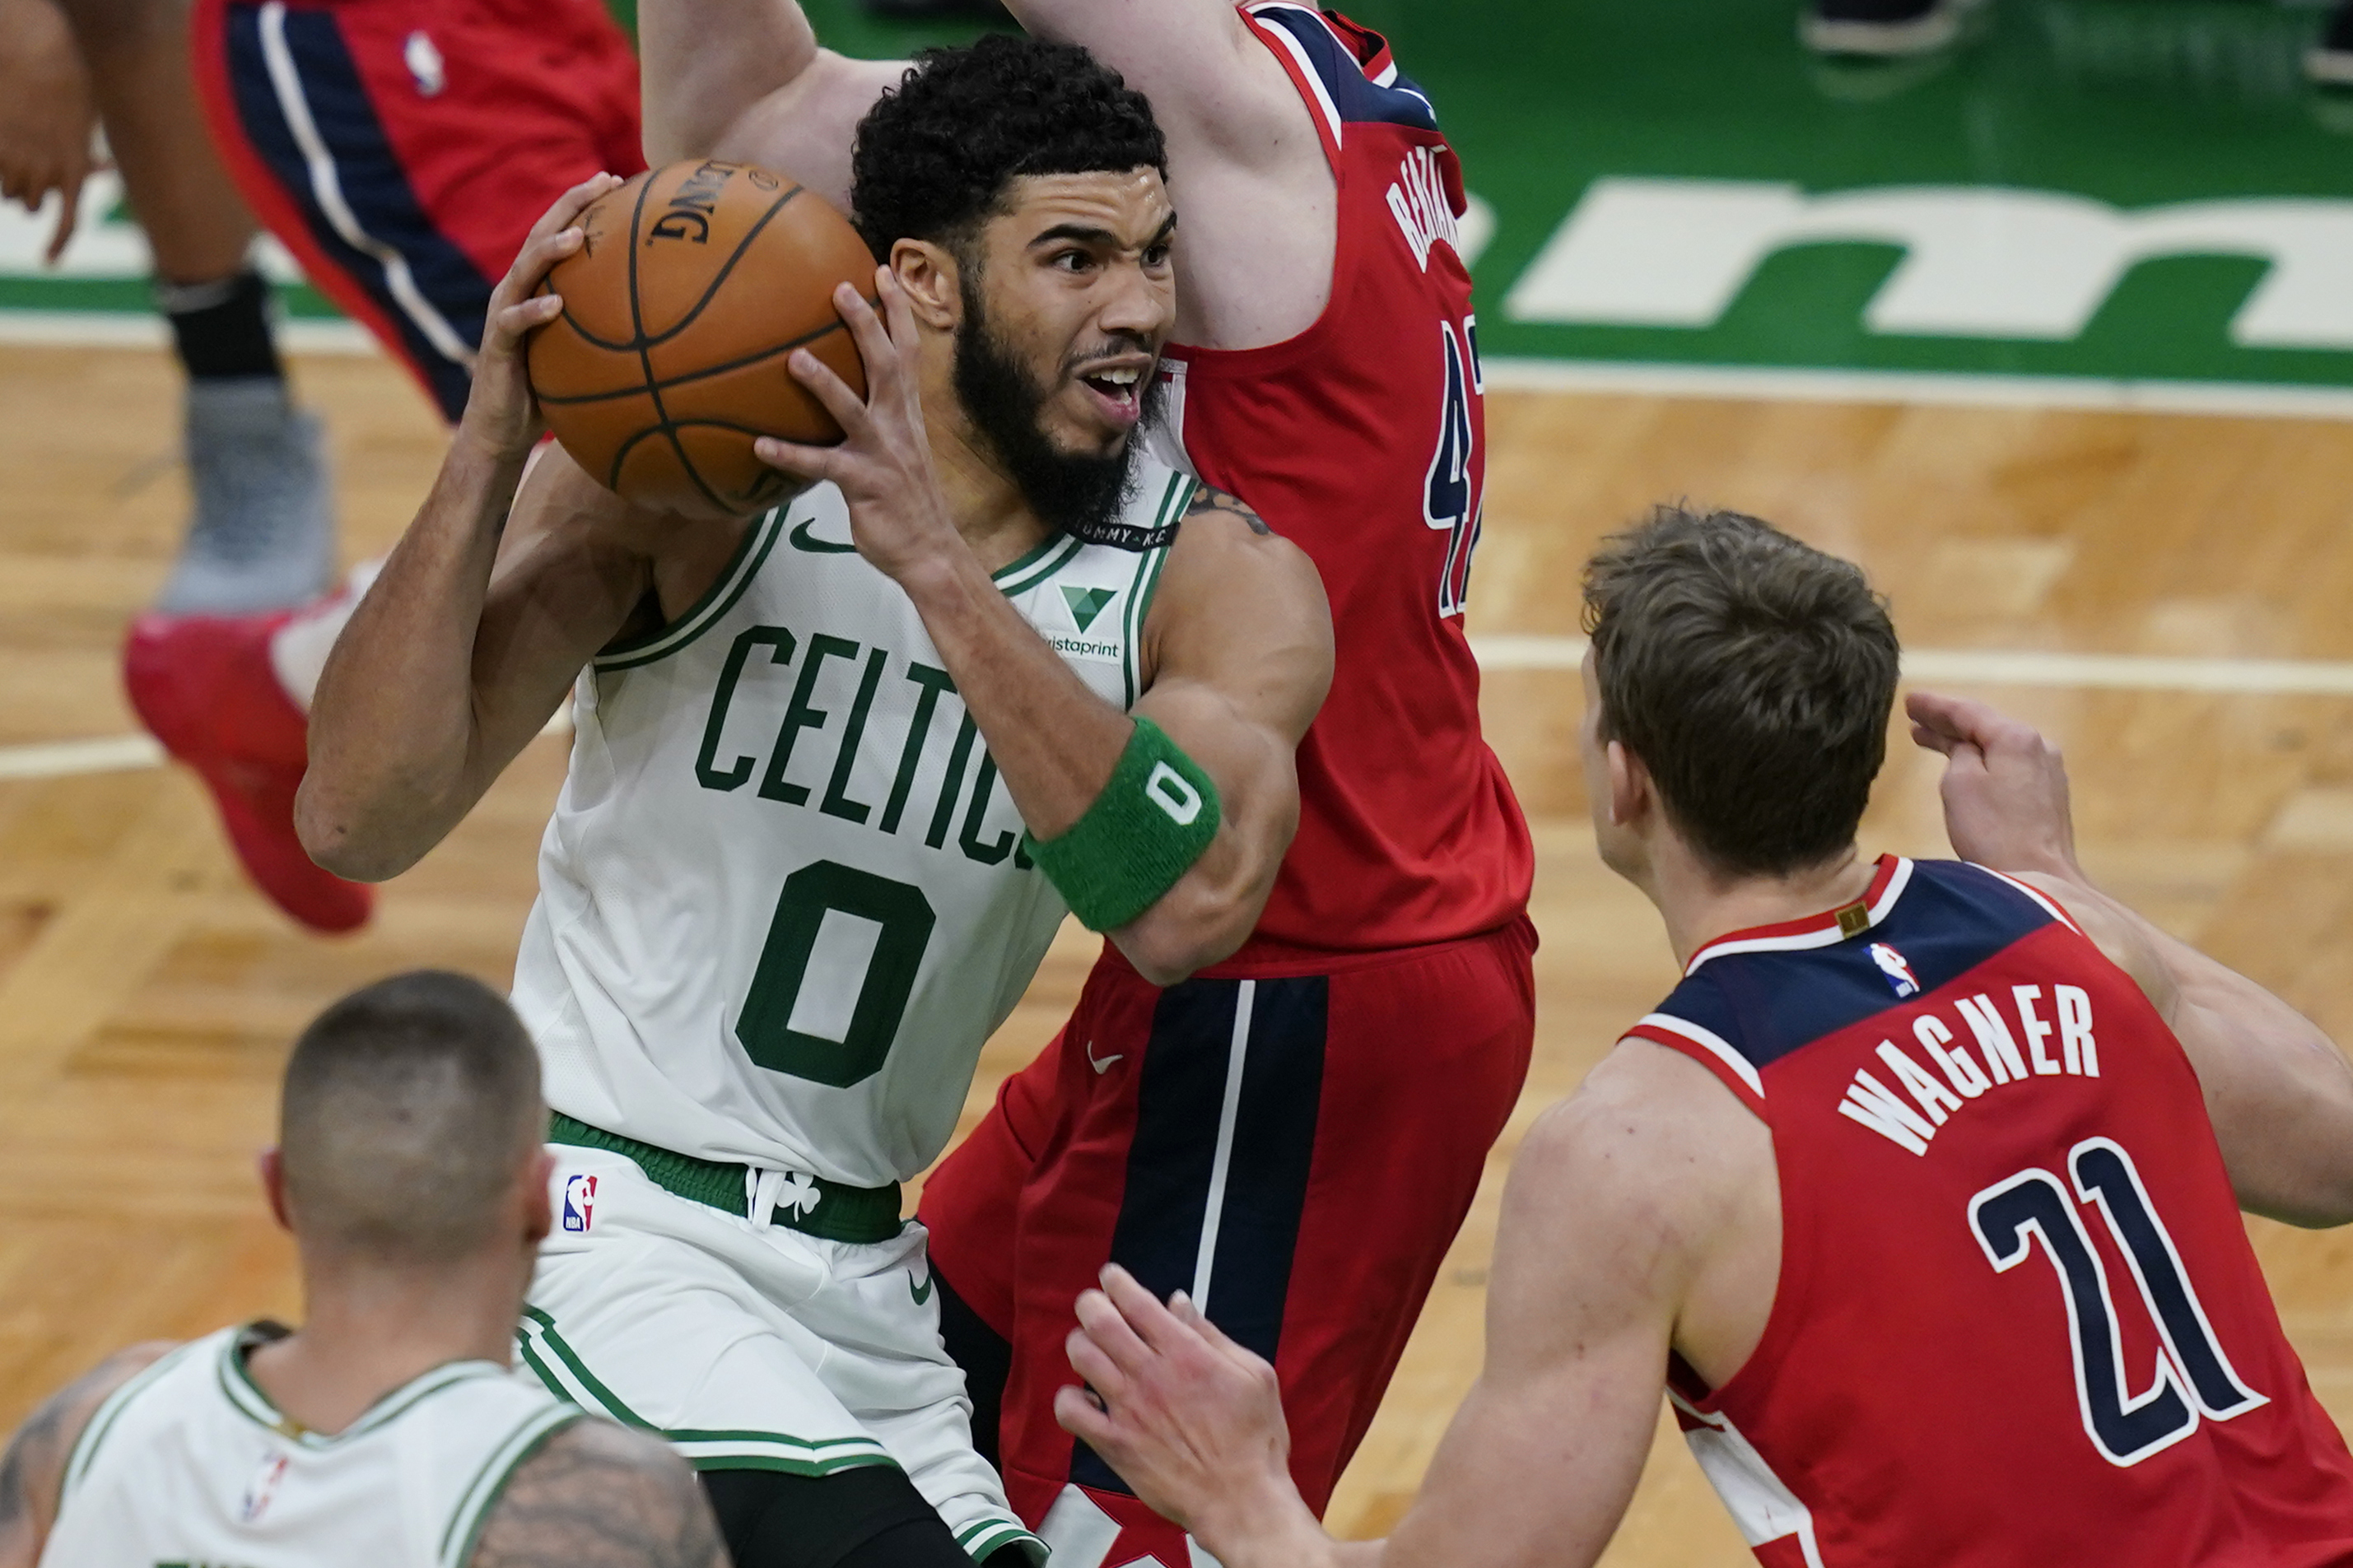 Jaylen Brown injury: Celtics star wears mask for practice, could